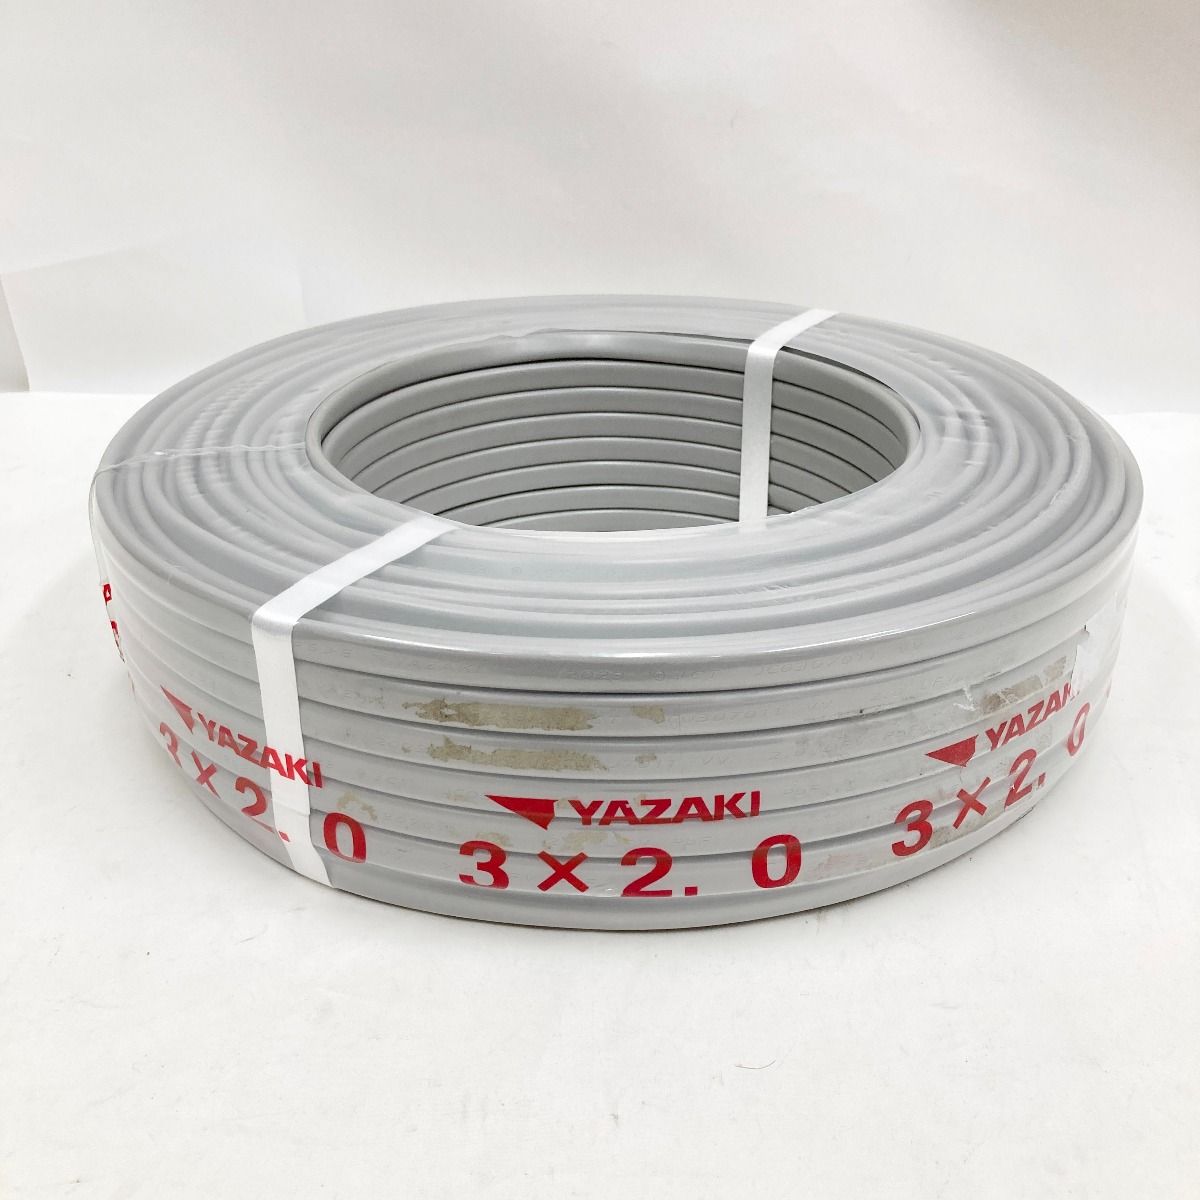 〇〇YAZAKI ヤザキ 電材 VVFケーブル 3芯 3× 2.0 100m 未開封品 赤白 